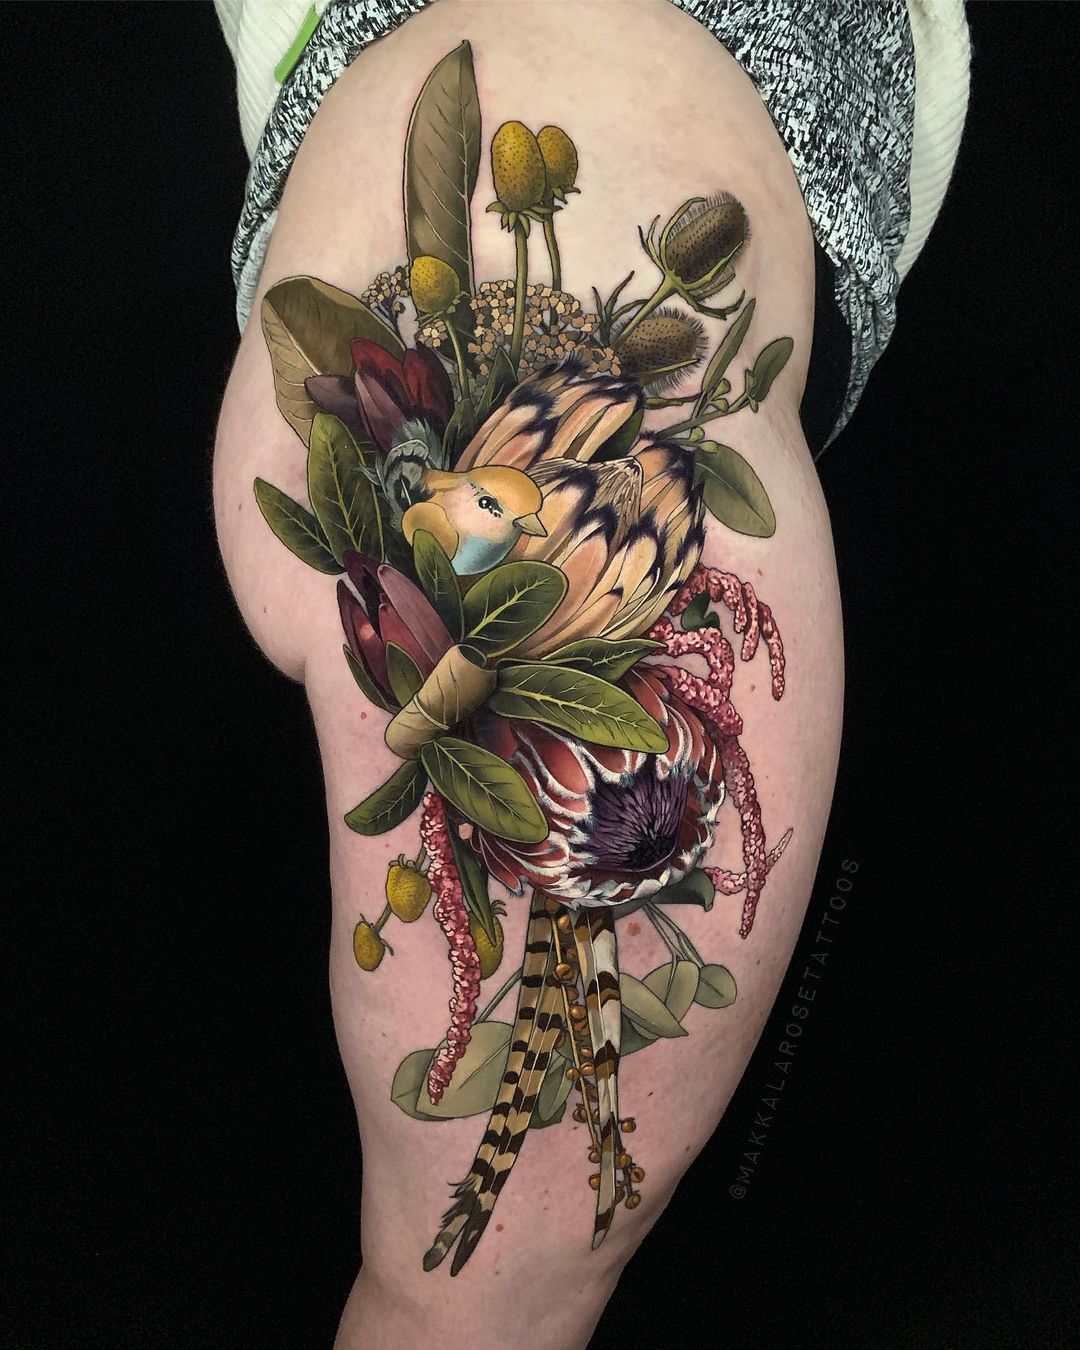 Extraordinary Tattoos Of Still Life Figures By Makkala Rose (19)